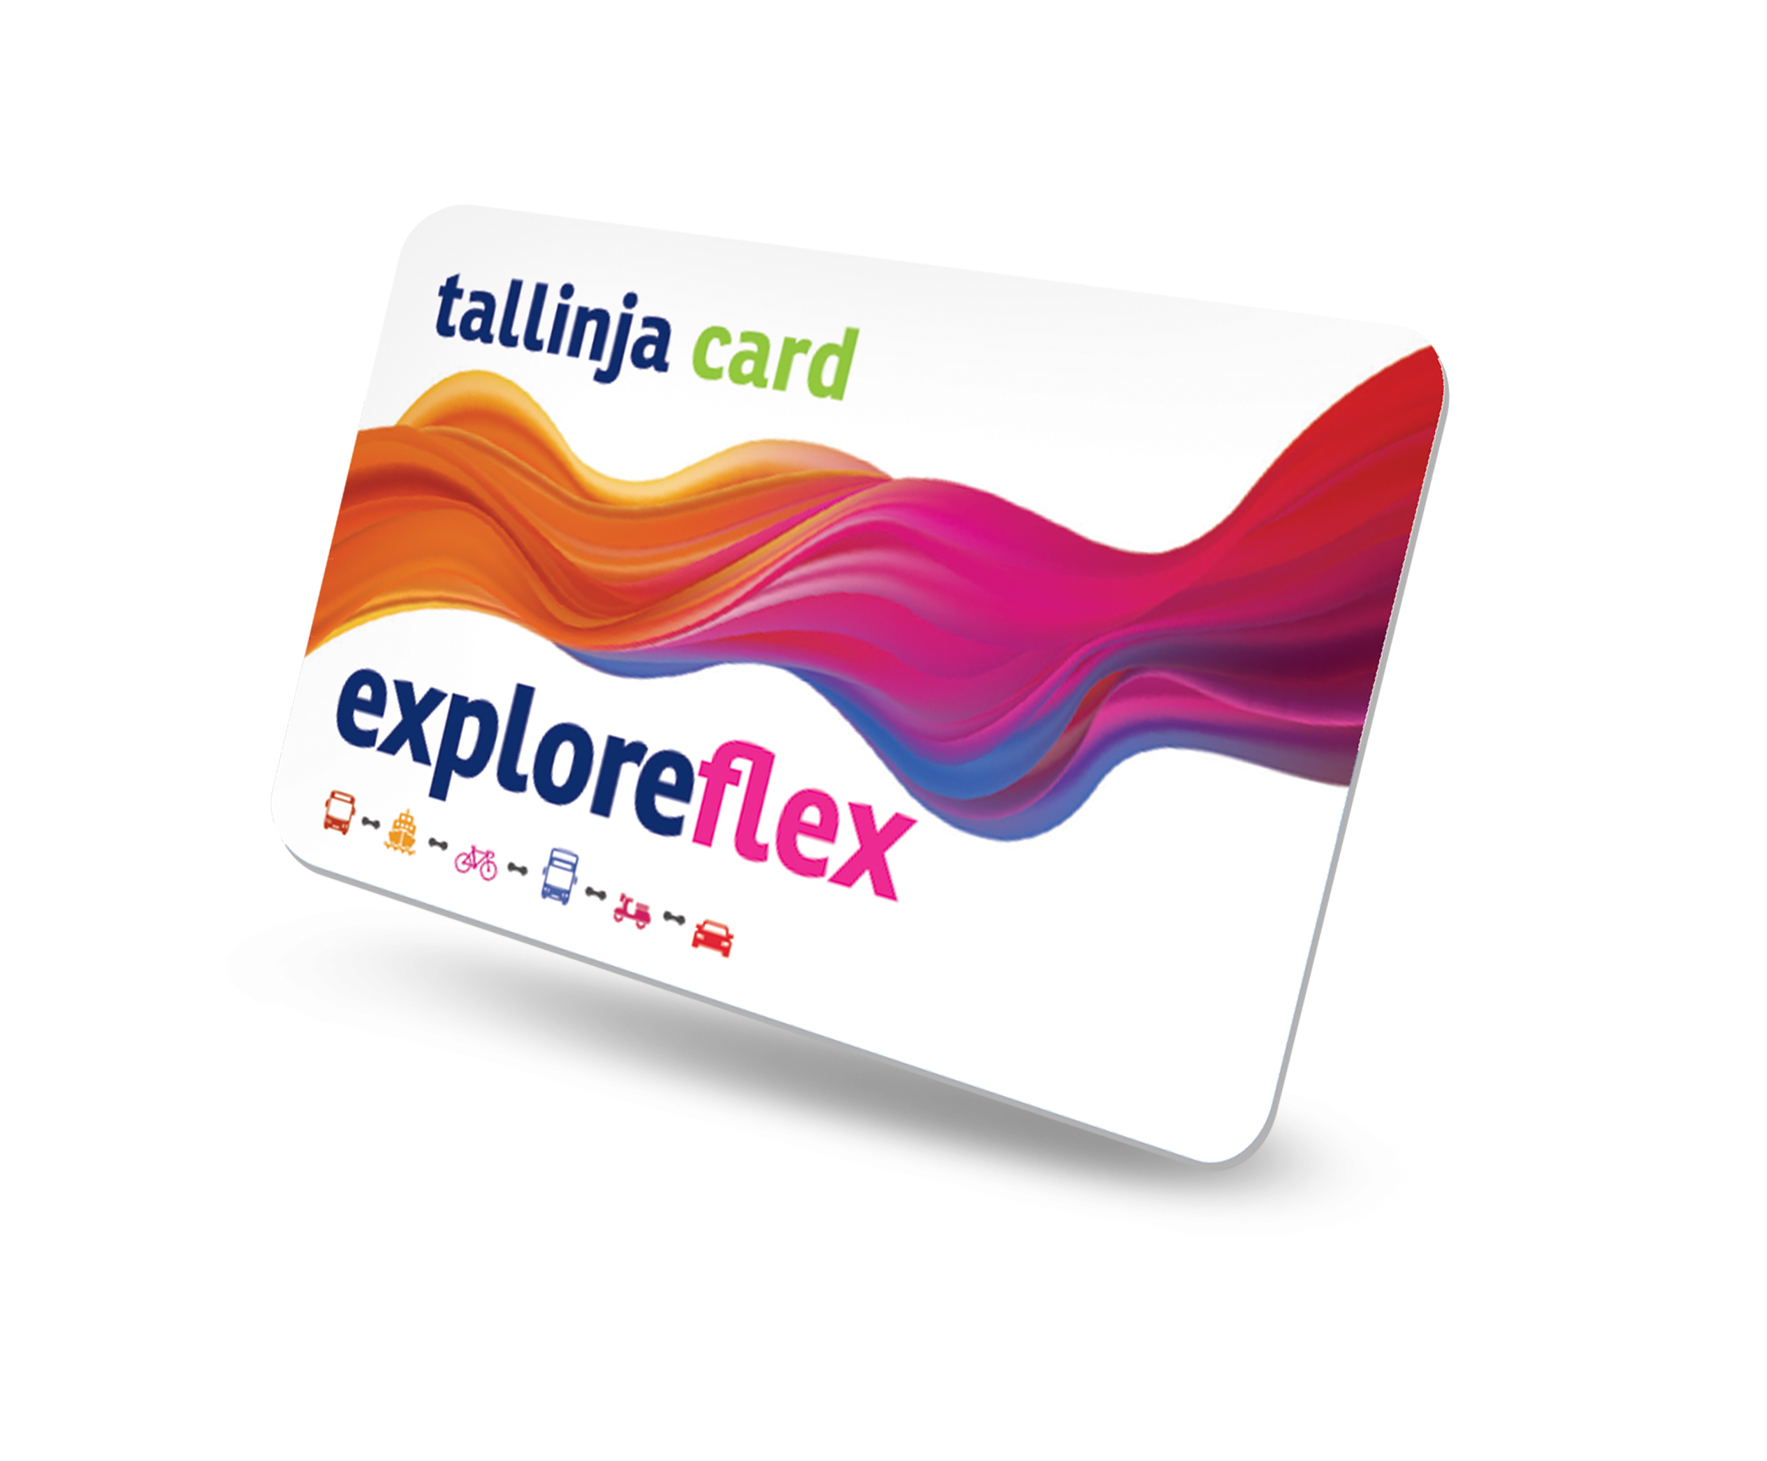 Explore Flex Card